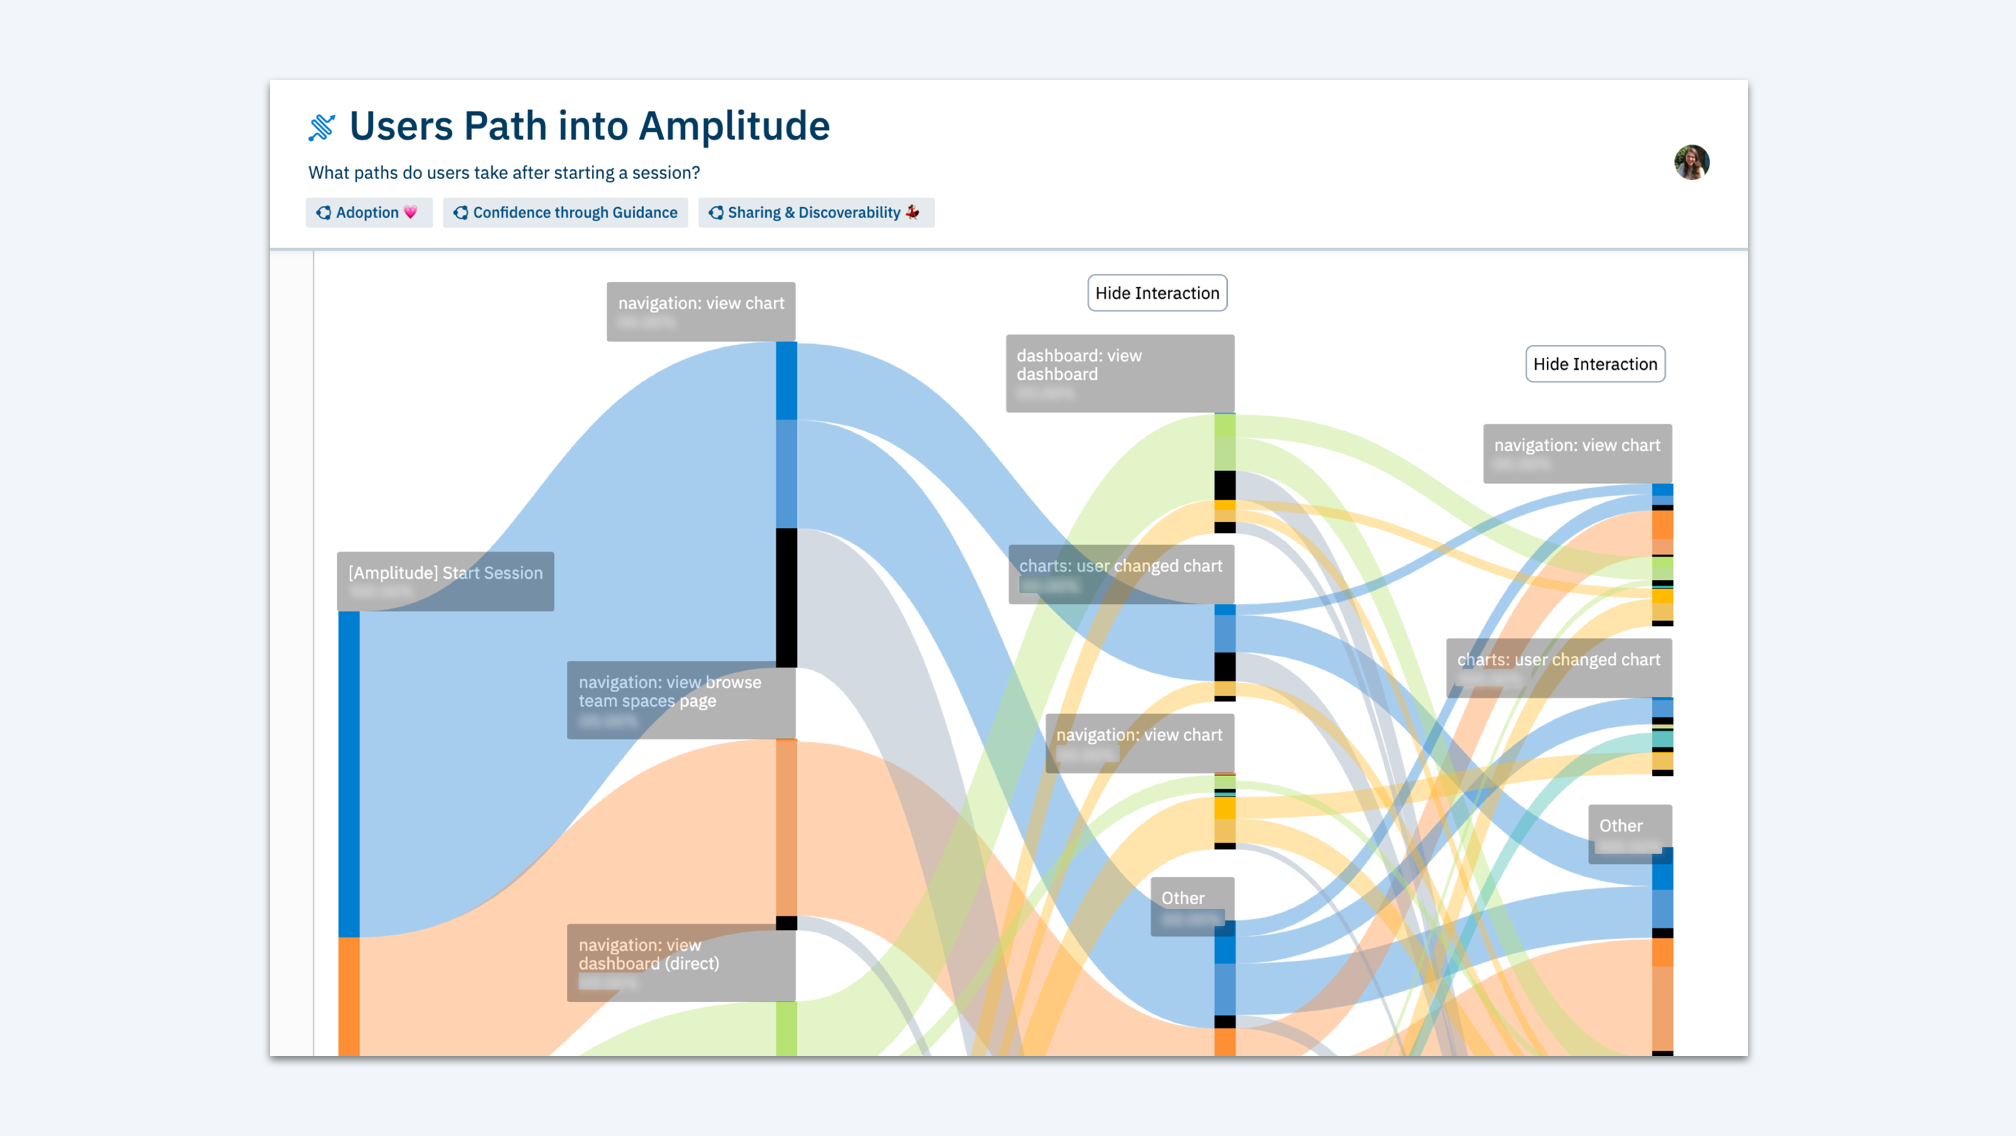 User paths into Amplitude